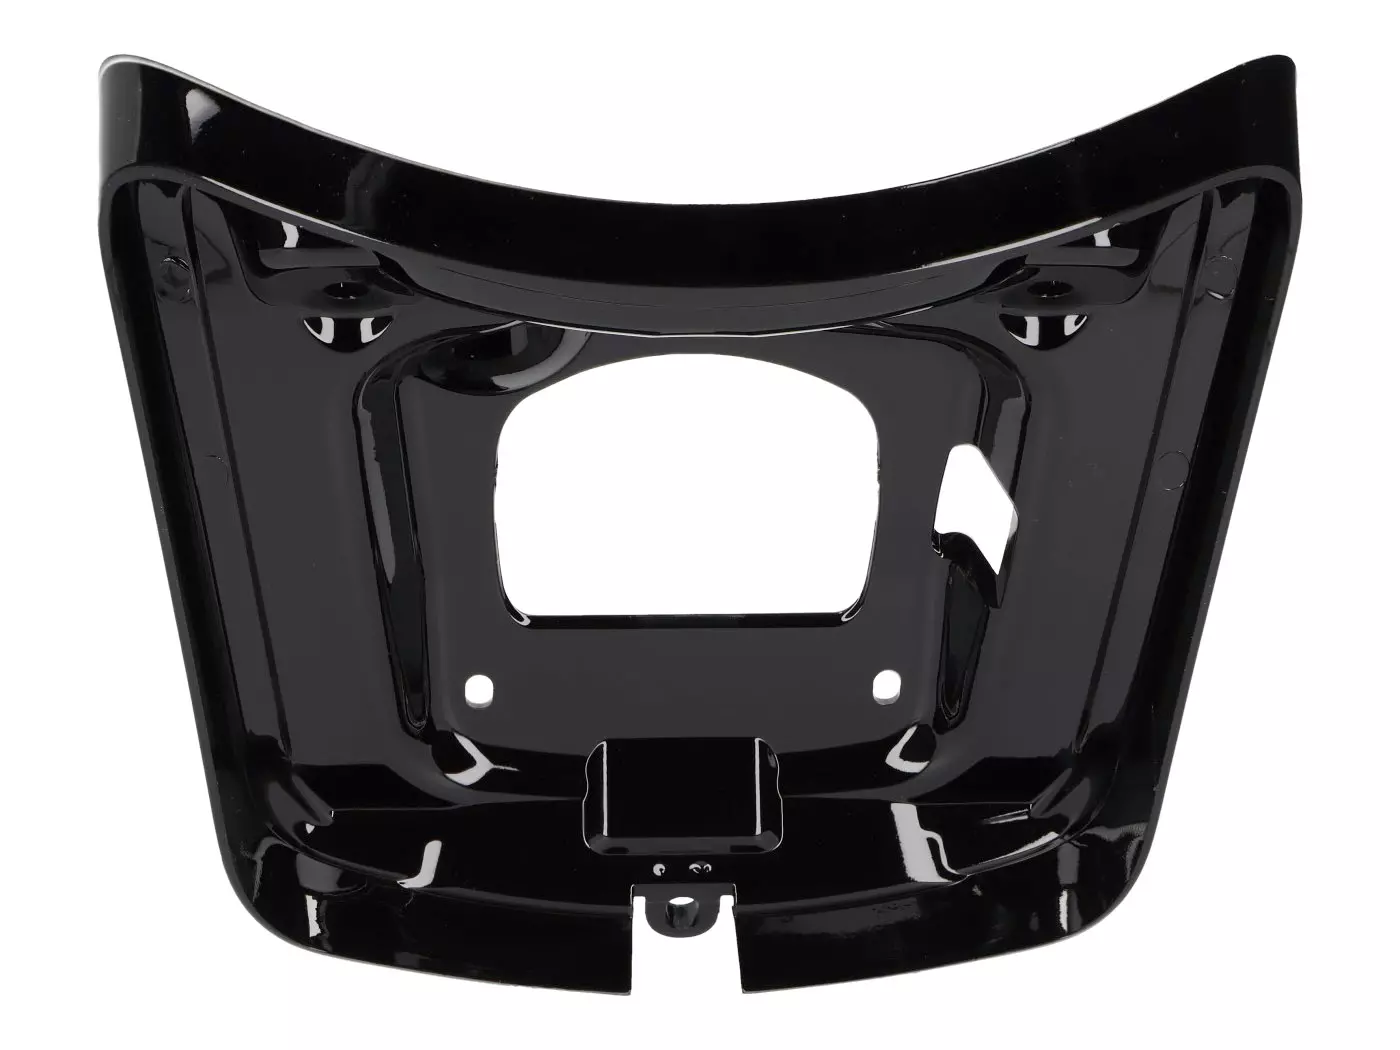 Tail Light Frame Power1 Glossy Black For Vespa GTS